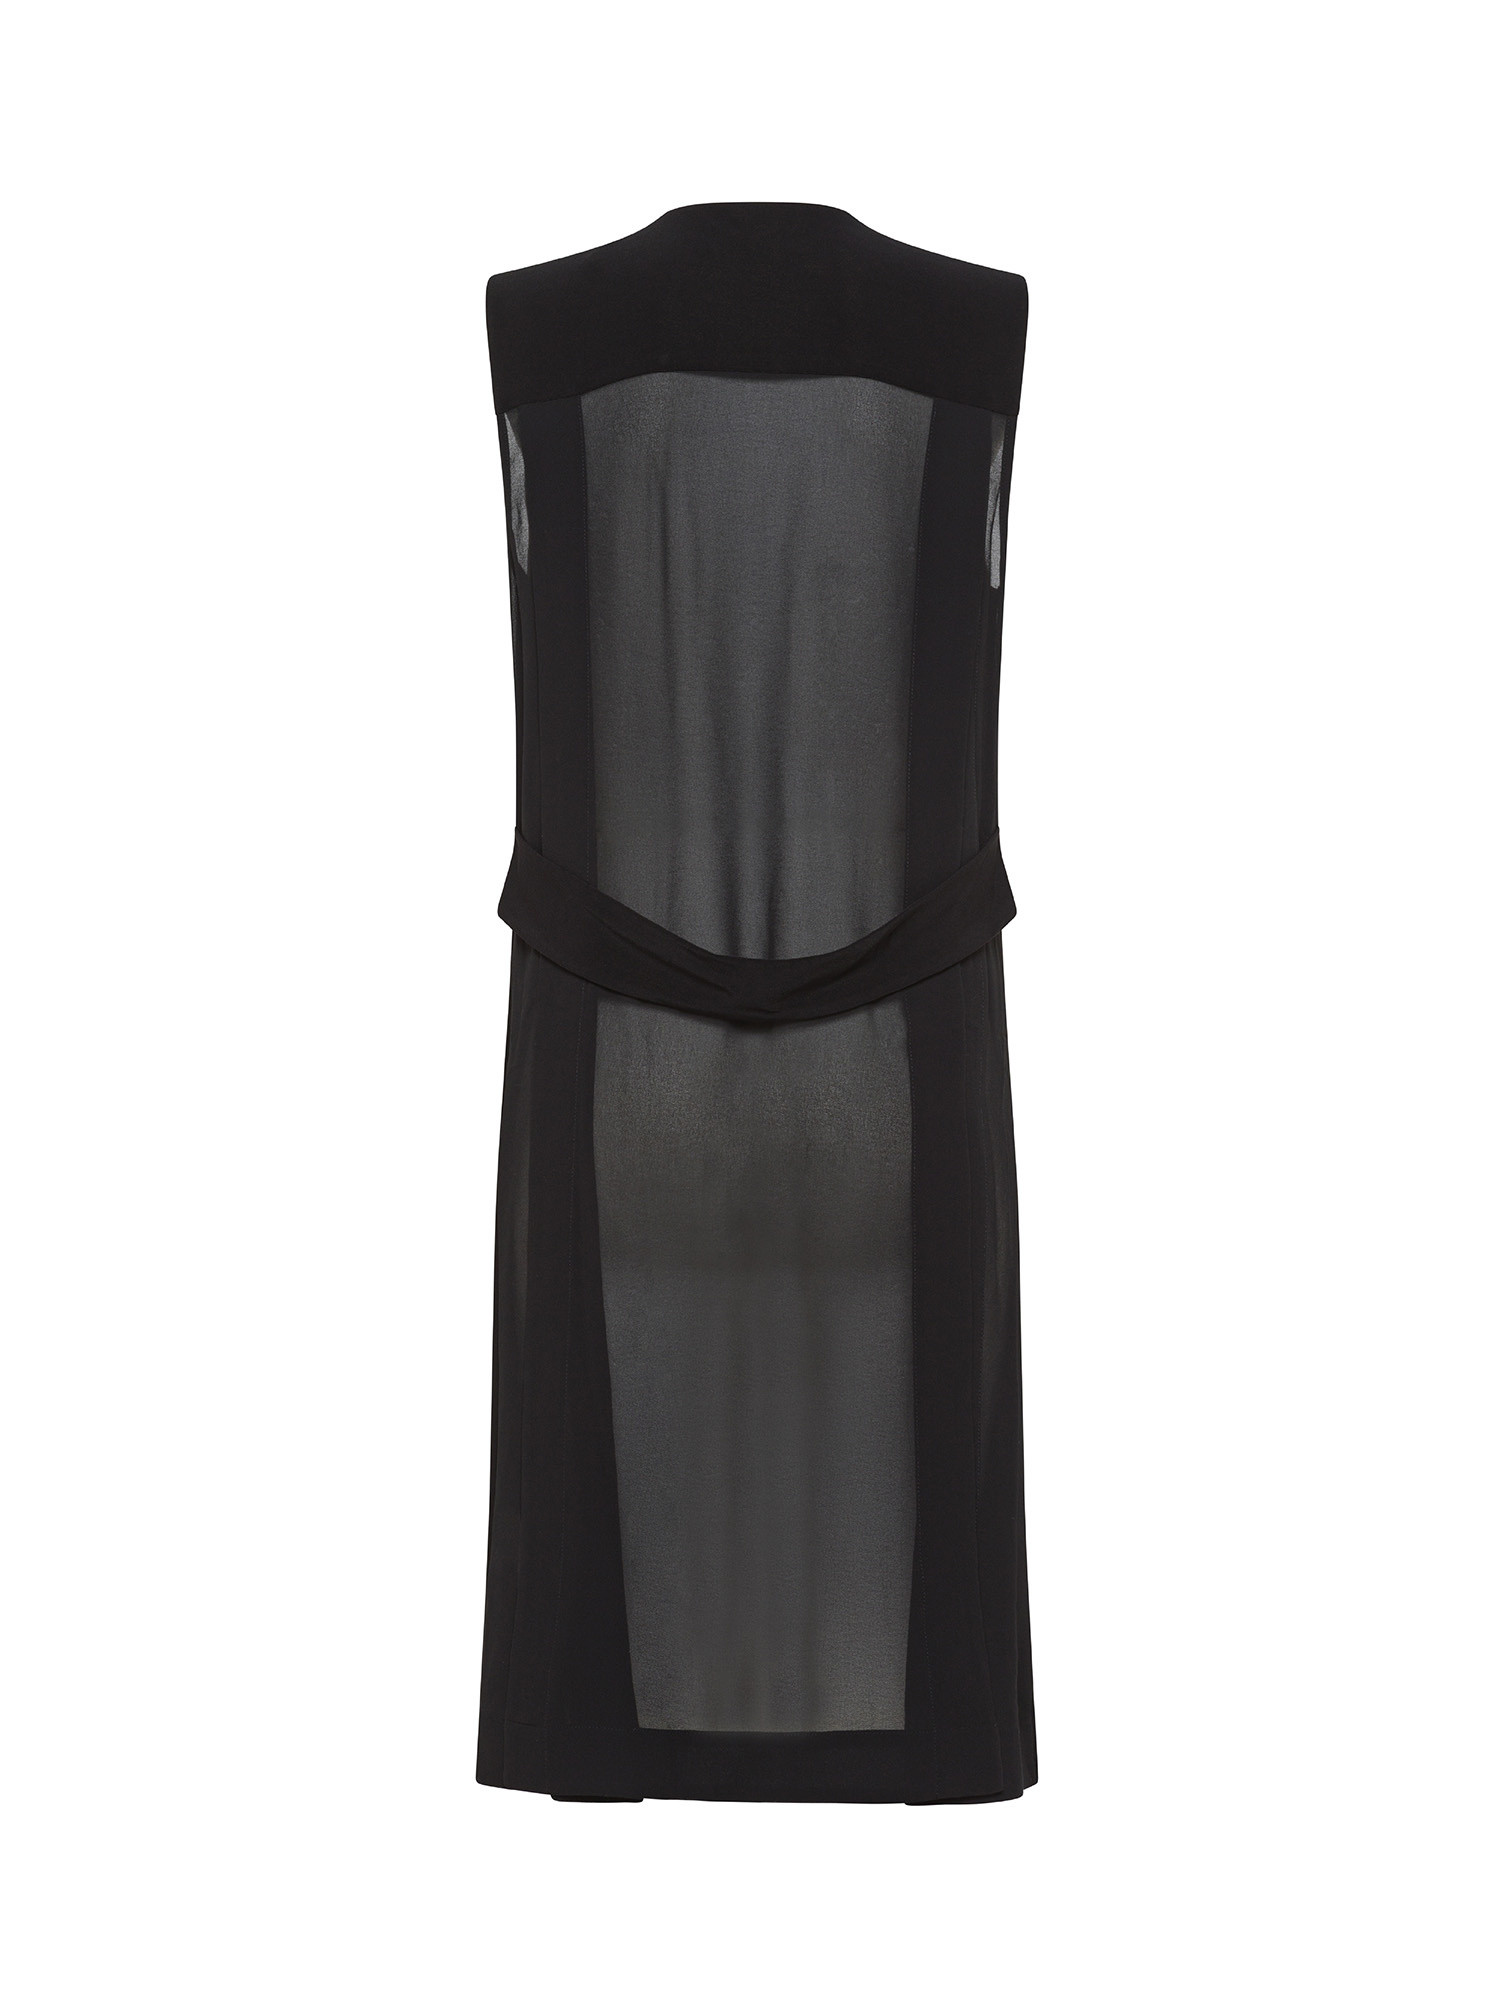 DKNY - Long cardigan with chiffon back, Black, large image number 1